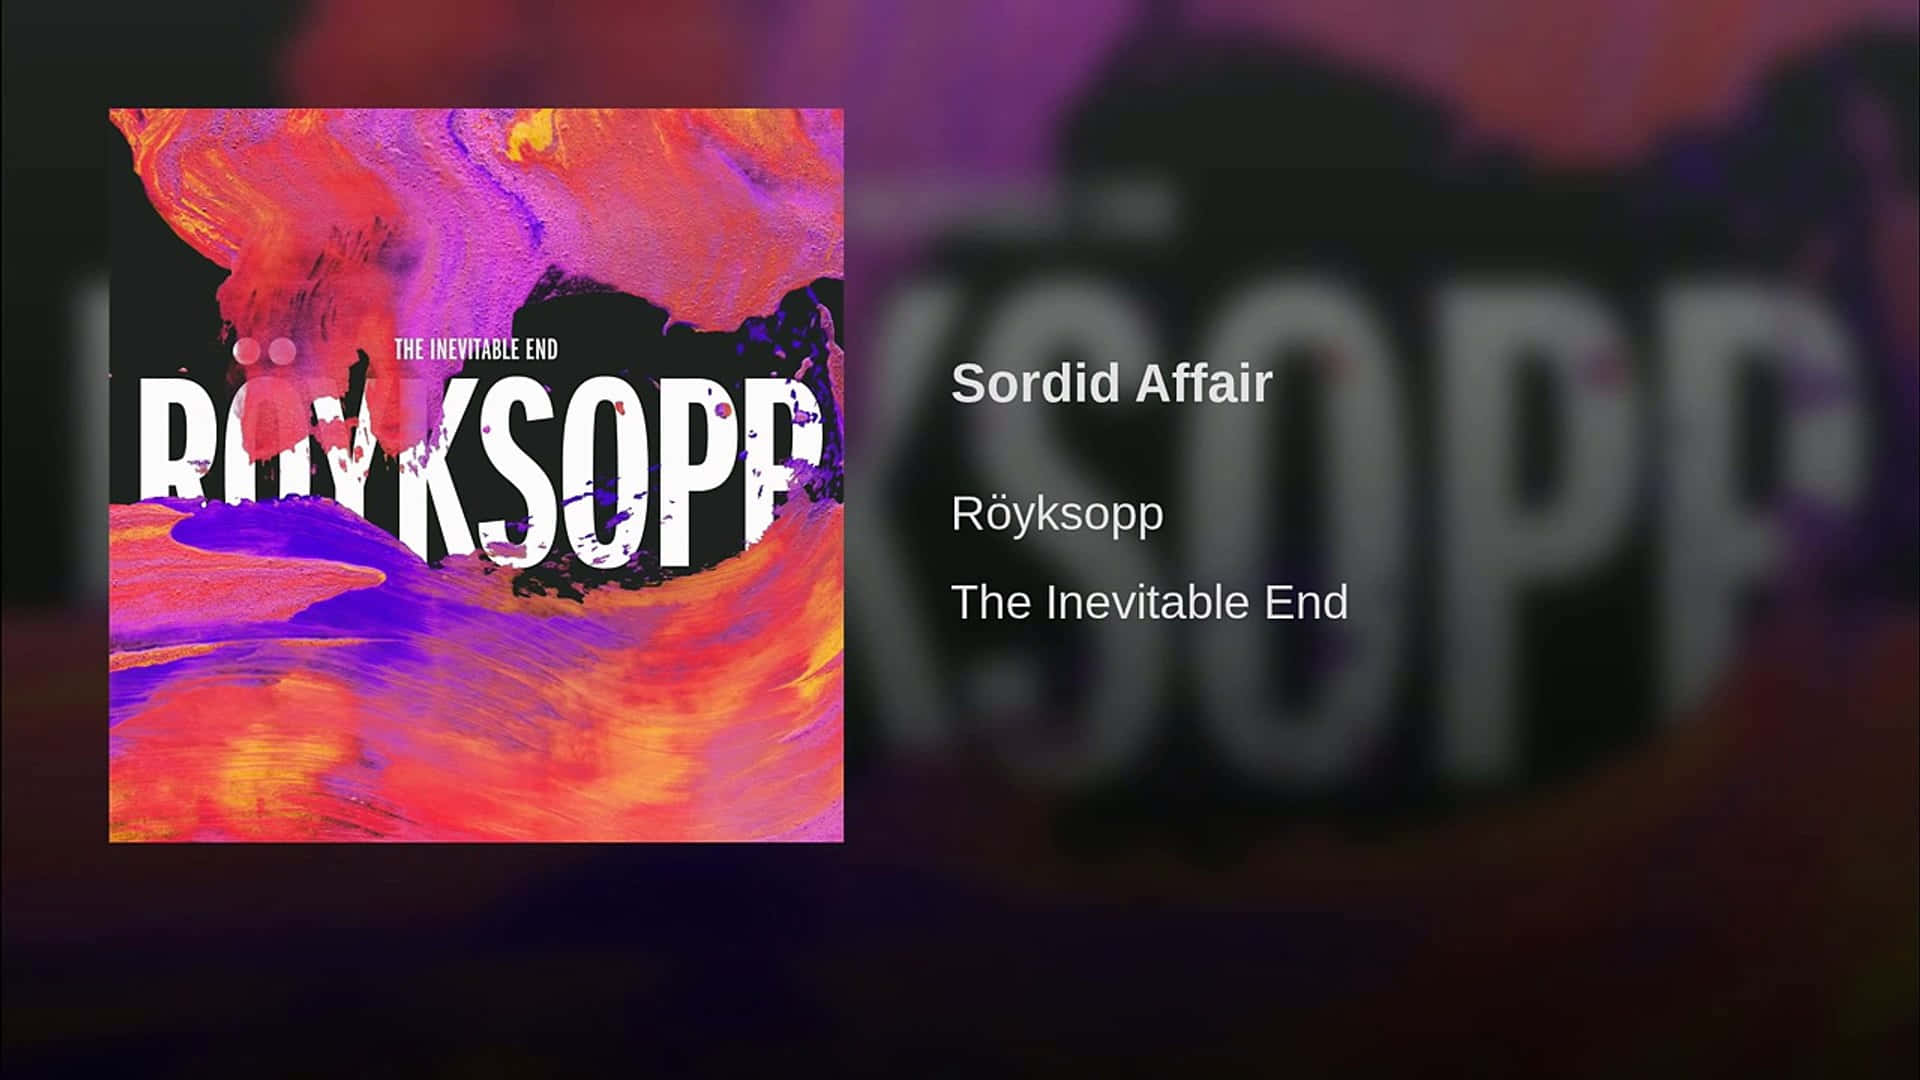 Comes again на звонок. The inevitable end Röyksopp. Карта inevitable end. Royksopp here she comes again исполнитель. Röyksopp - sordid Affair.